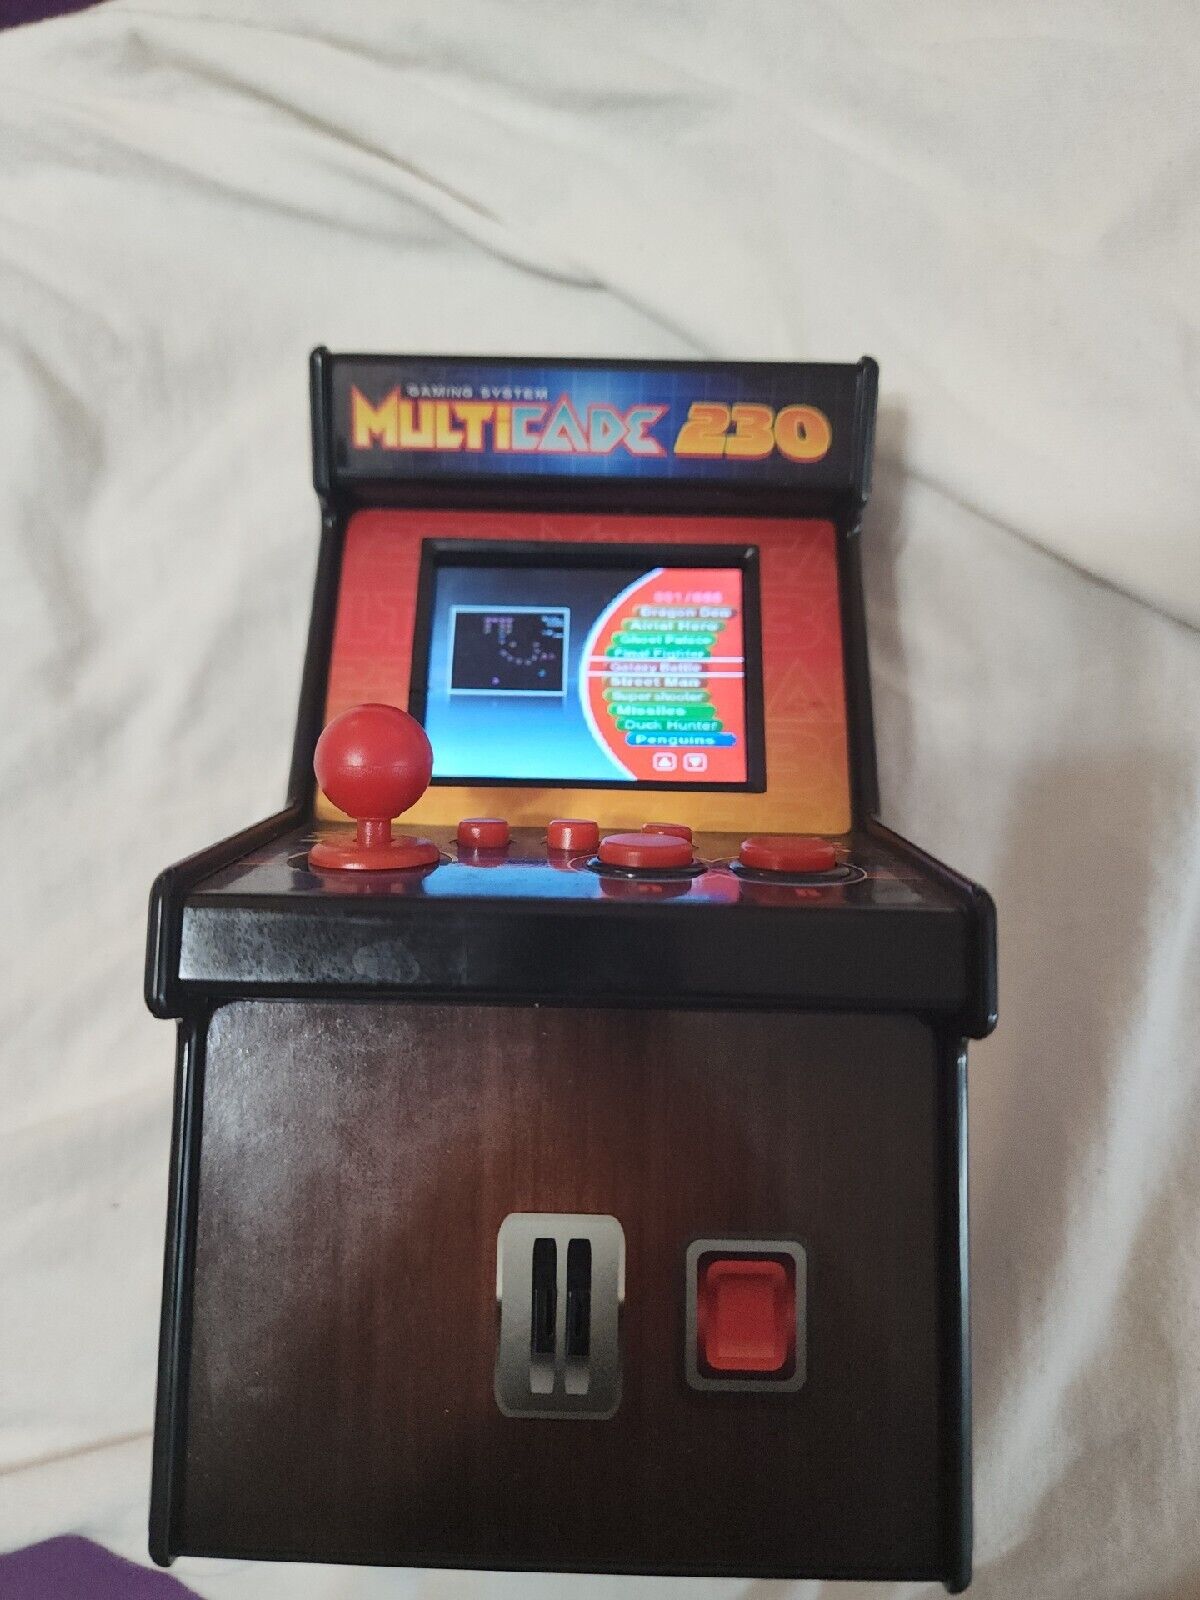 Multicade 230 Sound Logic XT Mini Retro Arcade Video Game Machine - works